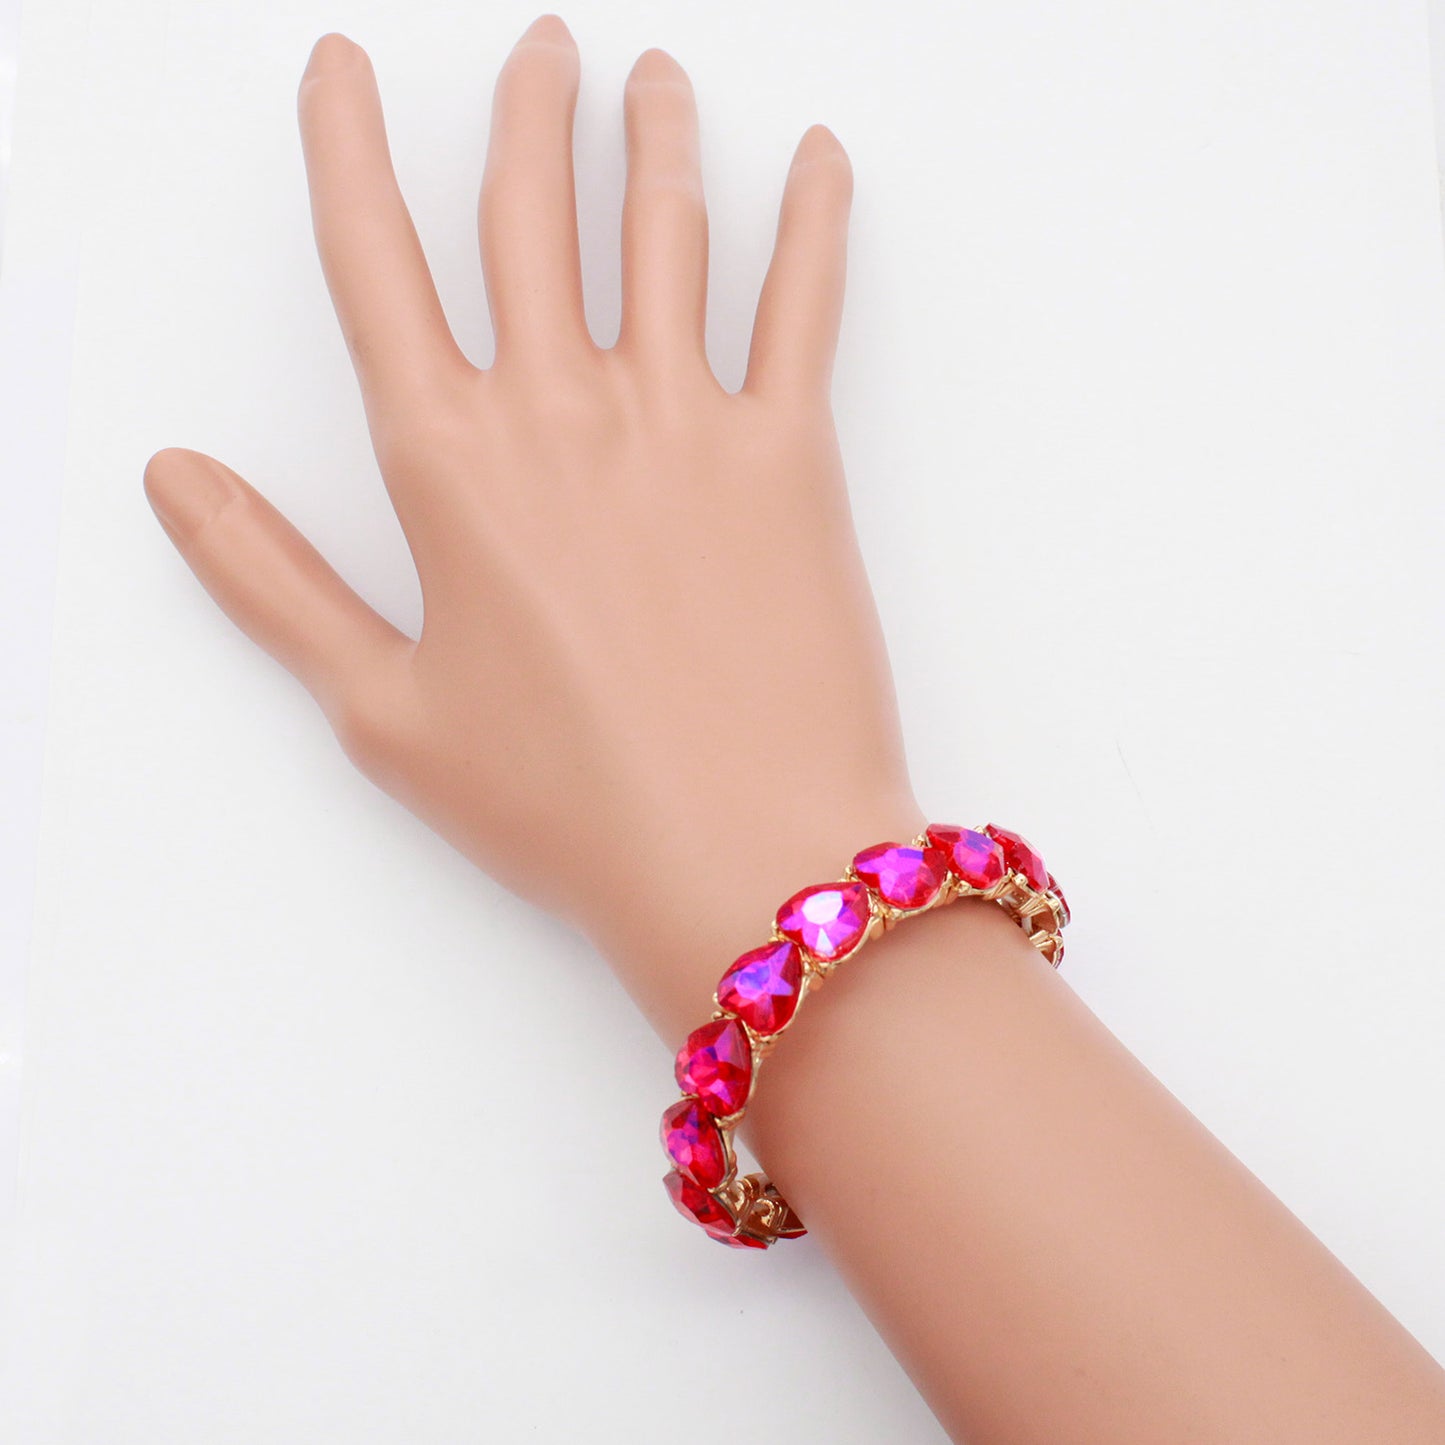 Lavencious Heart Shape Rhinestones Elastic Stretch Bracelet for Women (Gold Ruby)